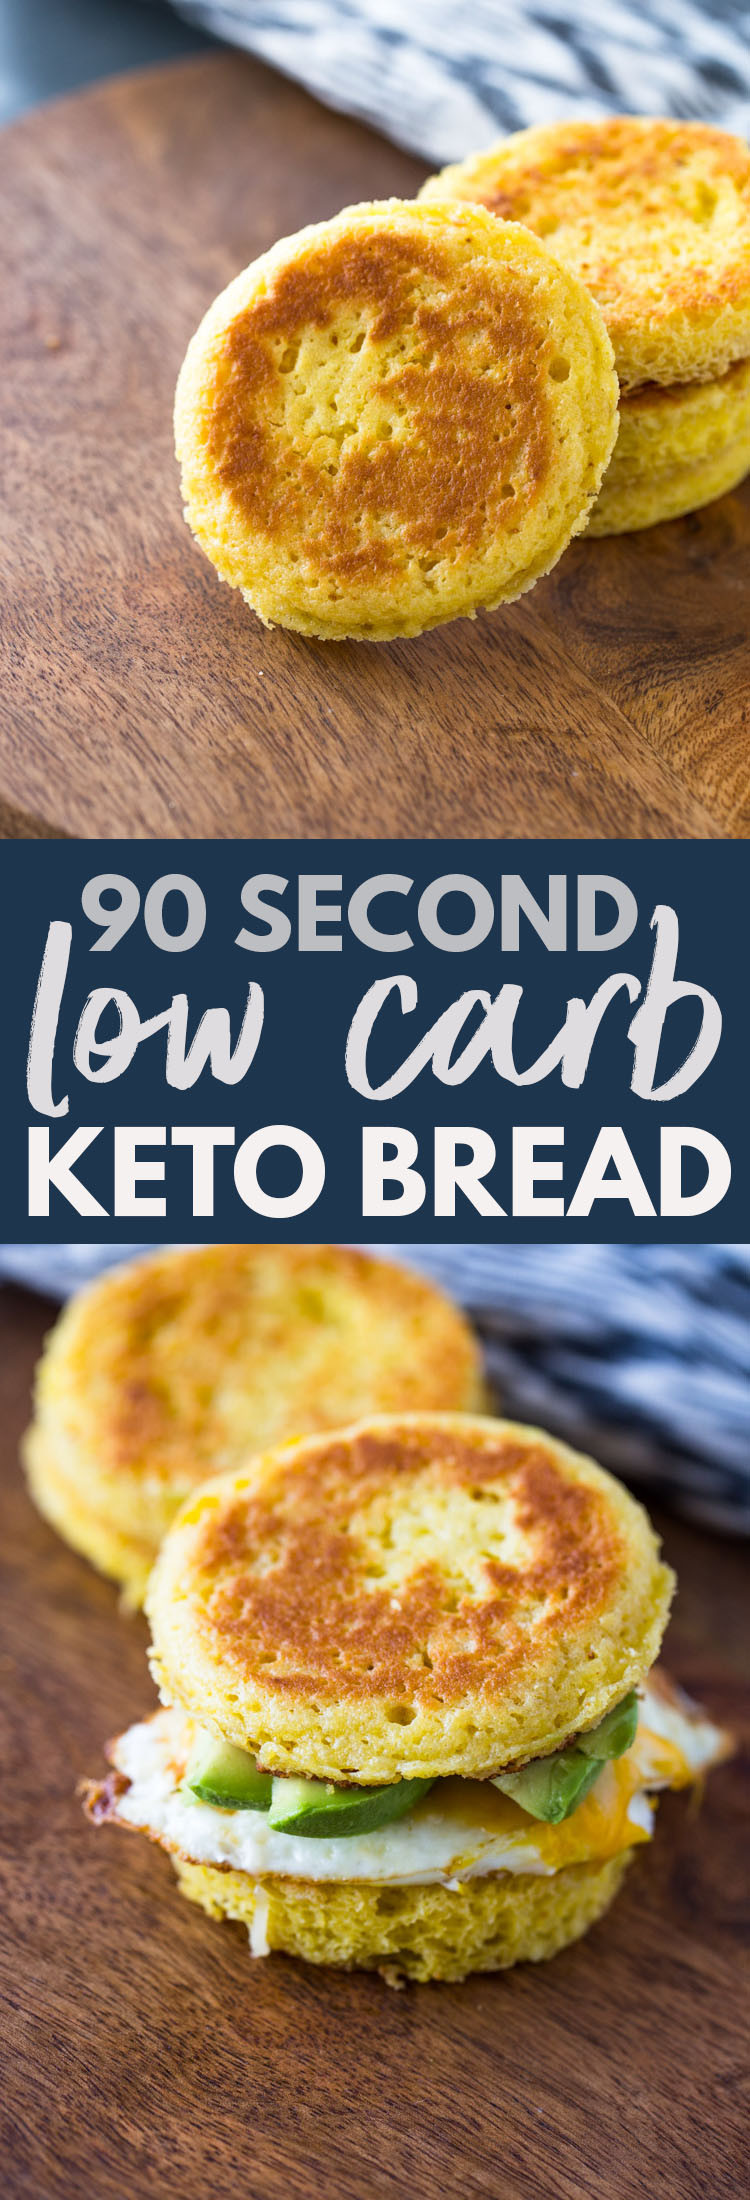 90 Second Keto Bread Videos
 90 Second Microwavable Low Carb Keto Bread